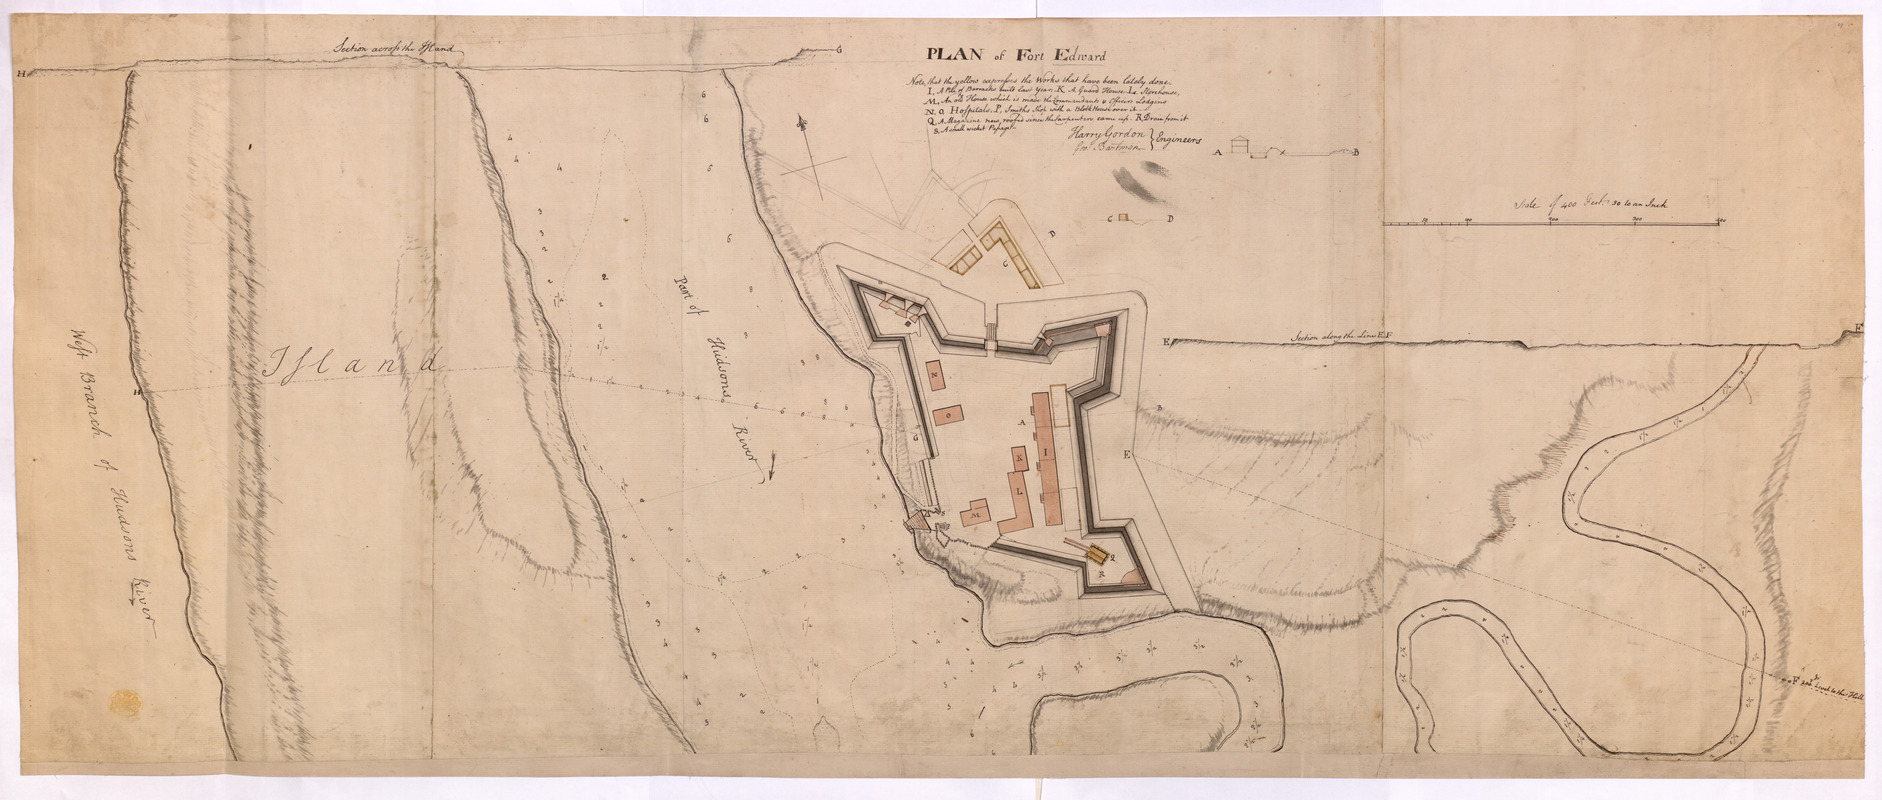 PLAN of Fort Edward